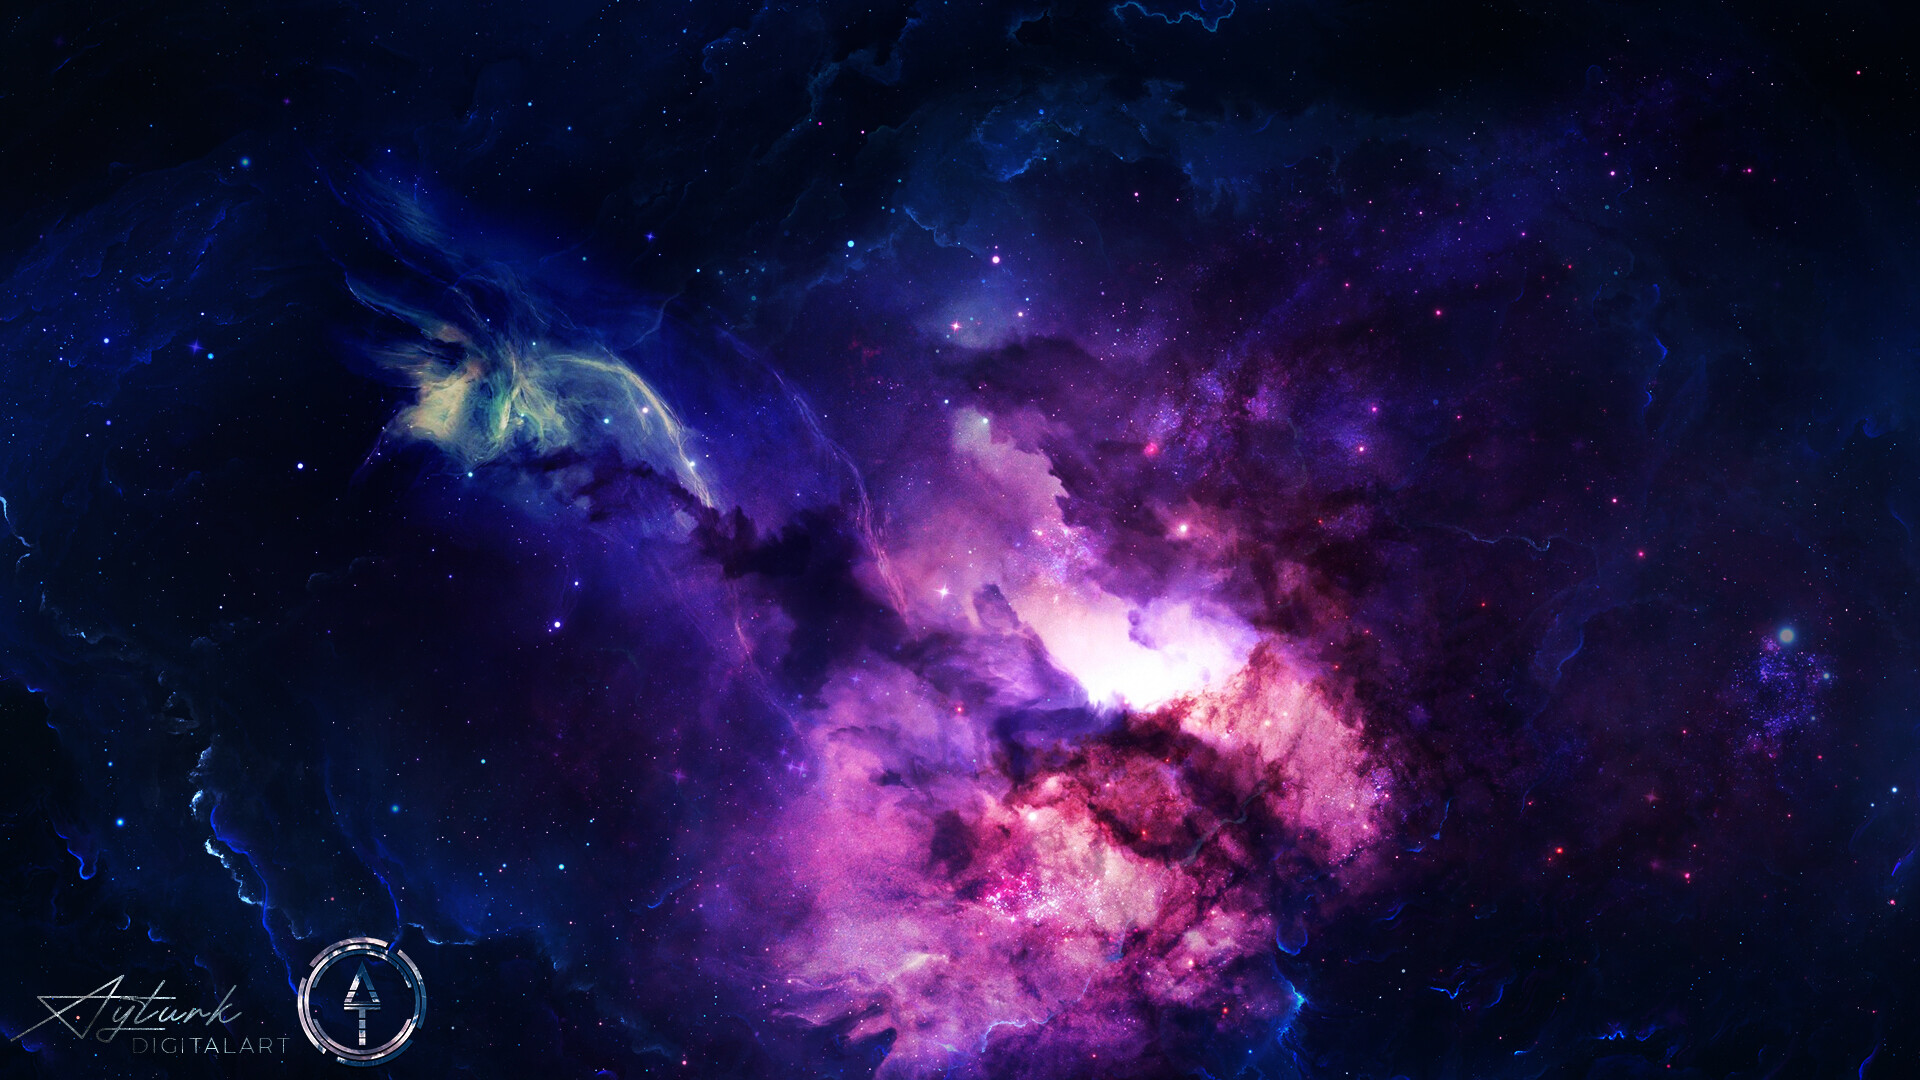 Ayturk Digitalart - Galaxy - 4k Space Desktop Backgrounds , HD Wallpaper & Backgrounds